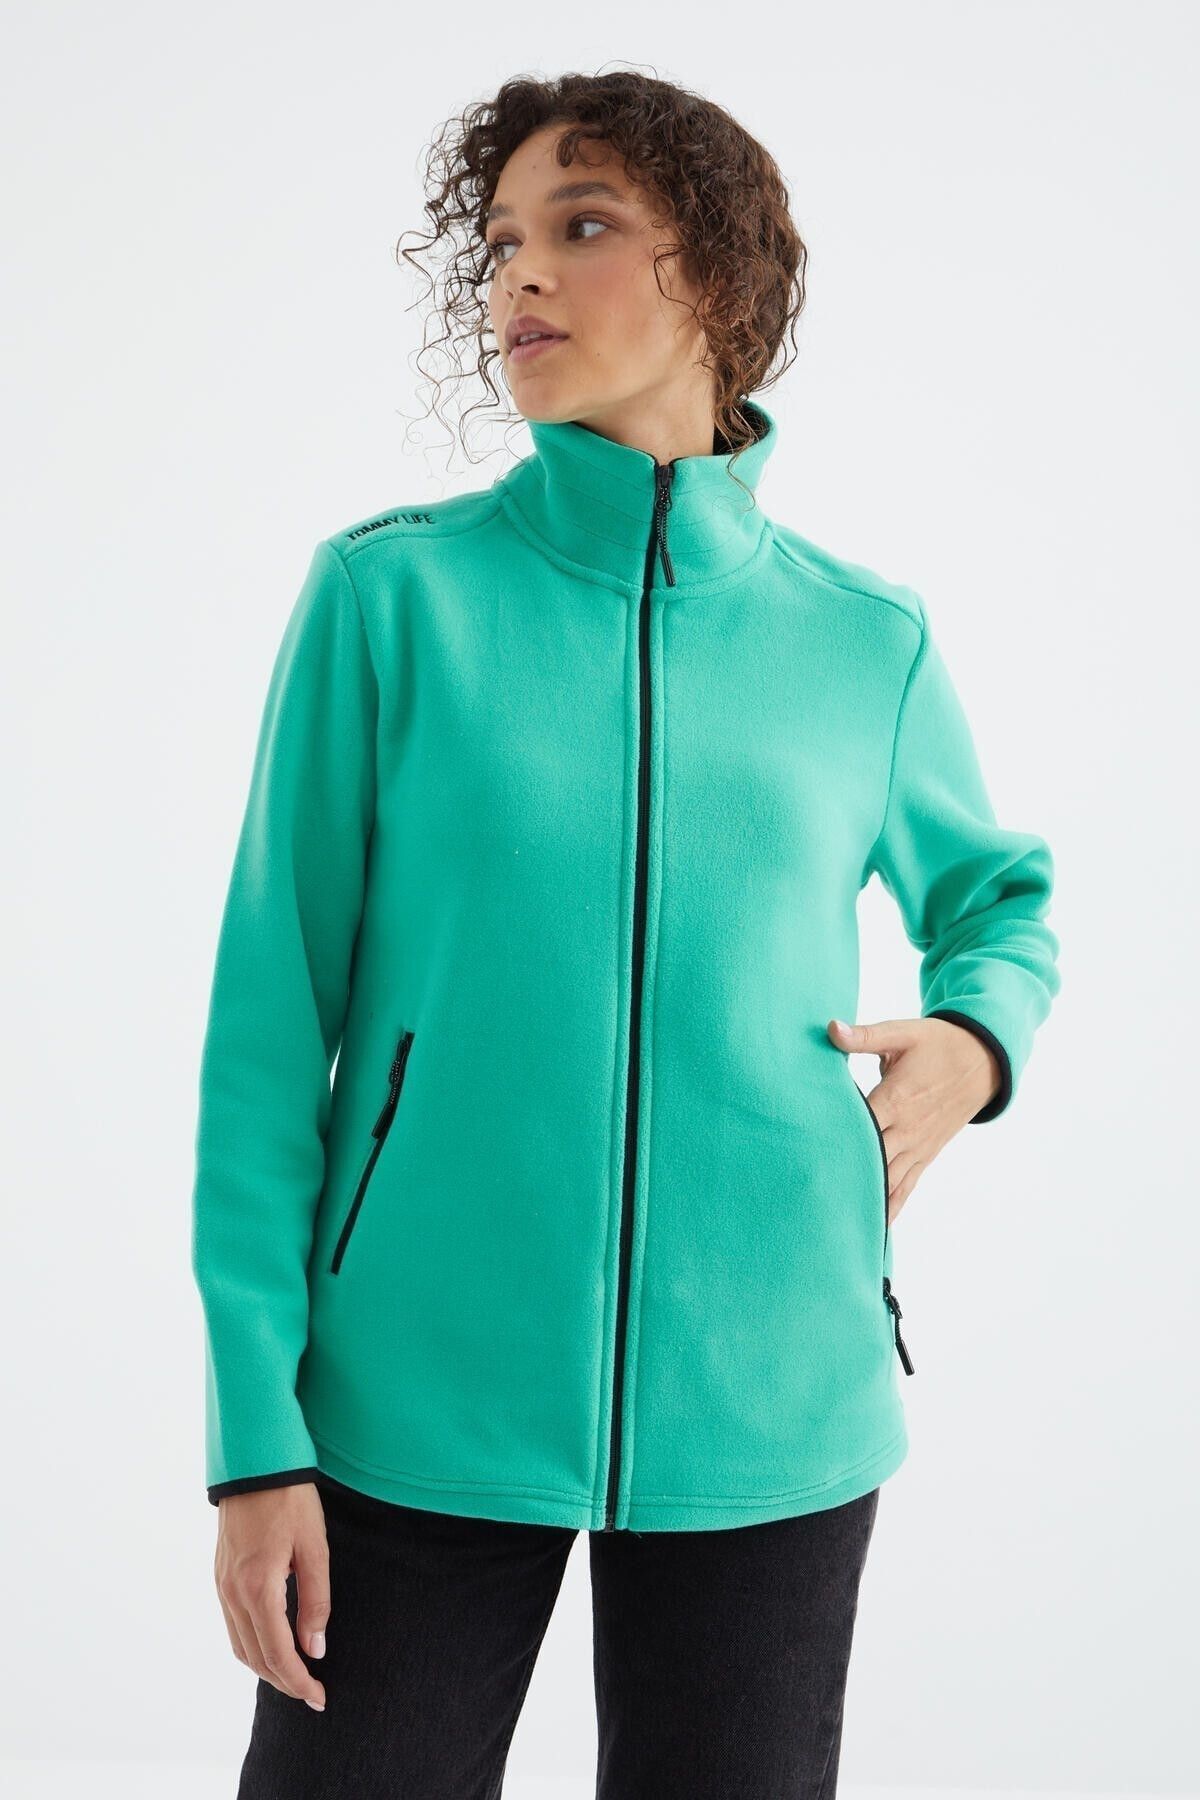 TOMMY LIFE Deniz Yeşili Dik Yaka Fermuarlı Rahat Form Kadın Polar Sweatshirt - 97173